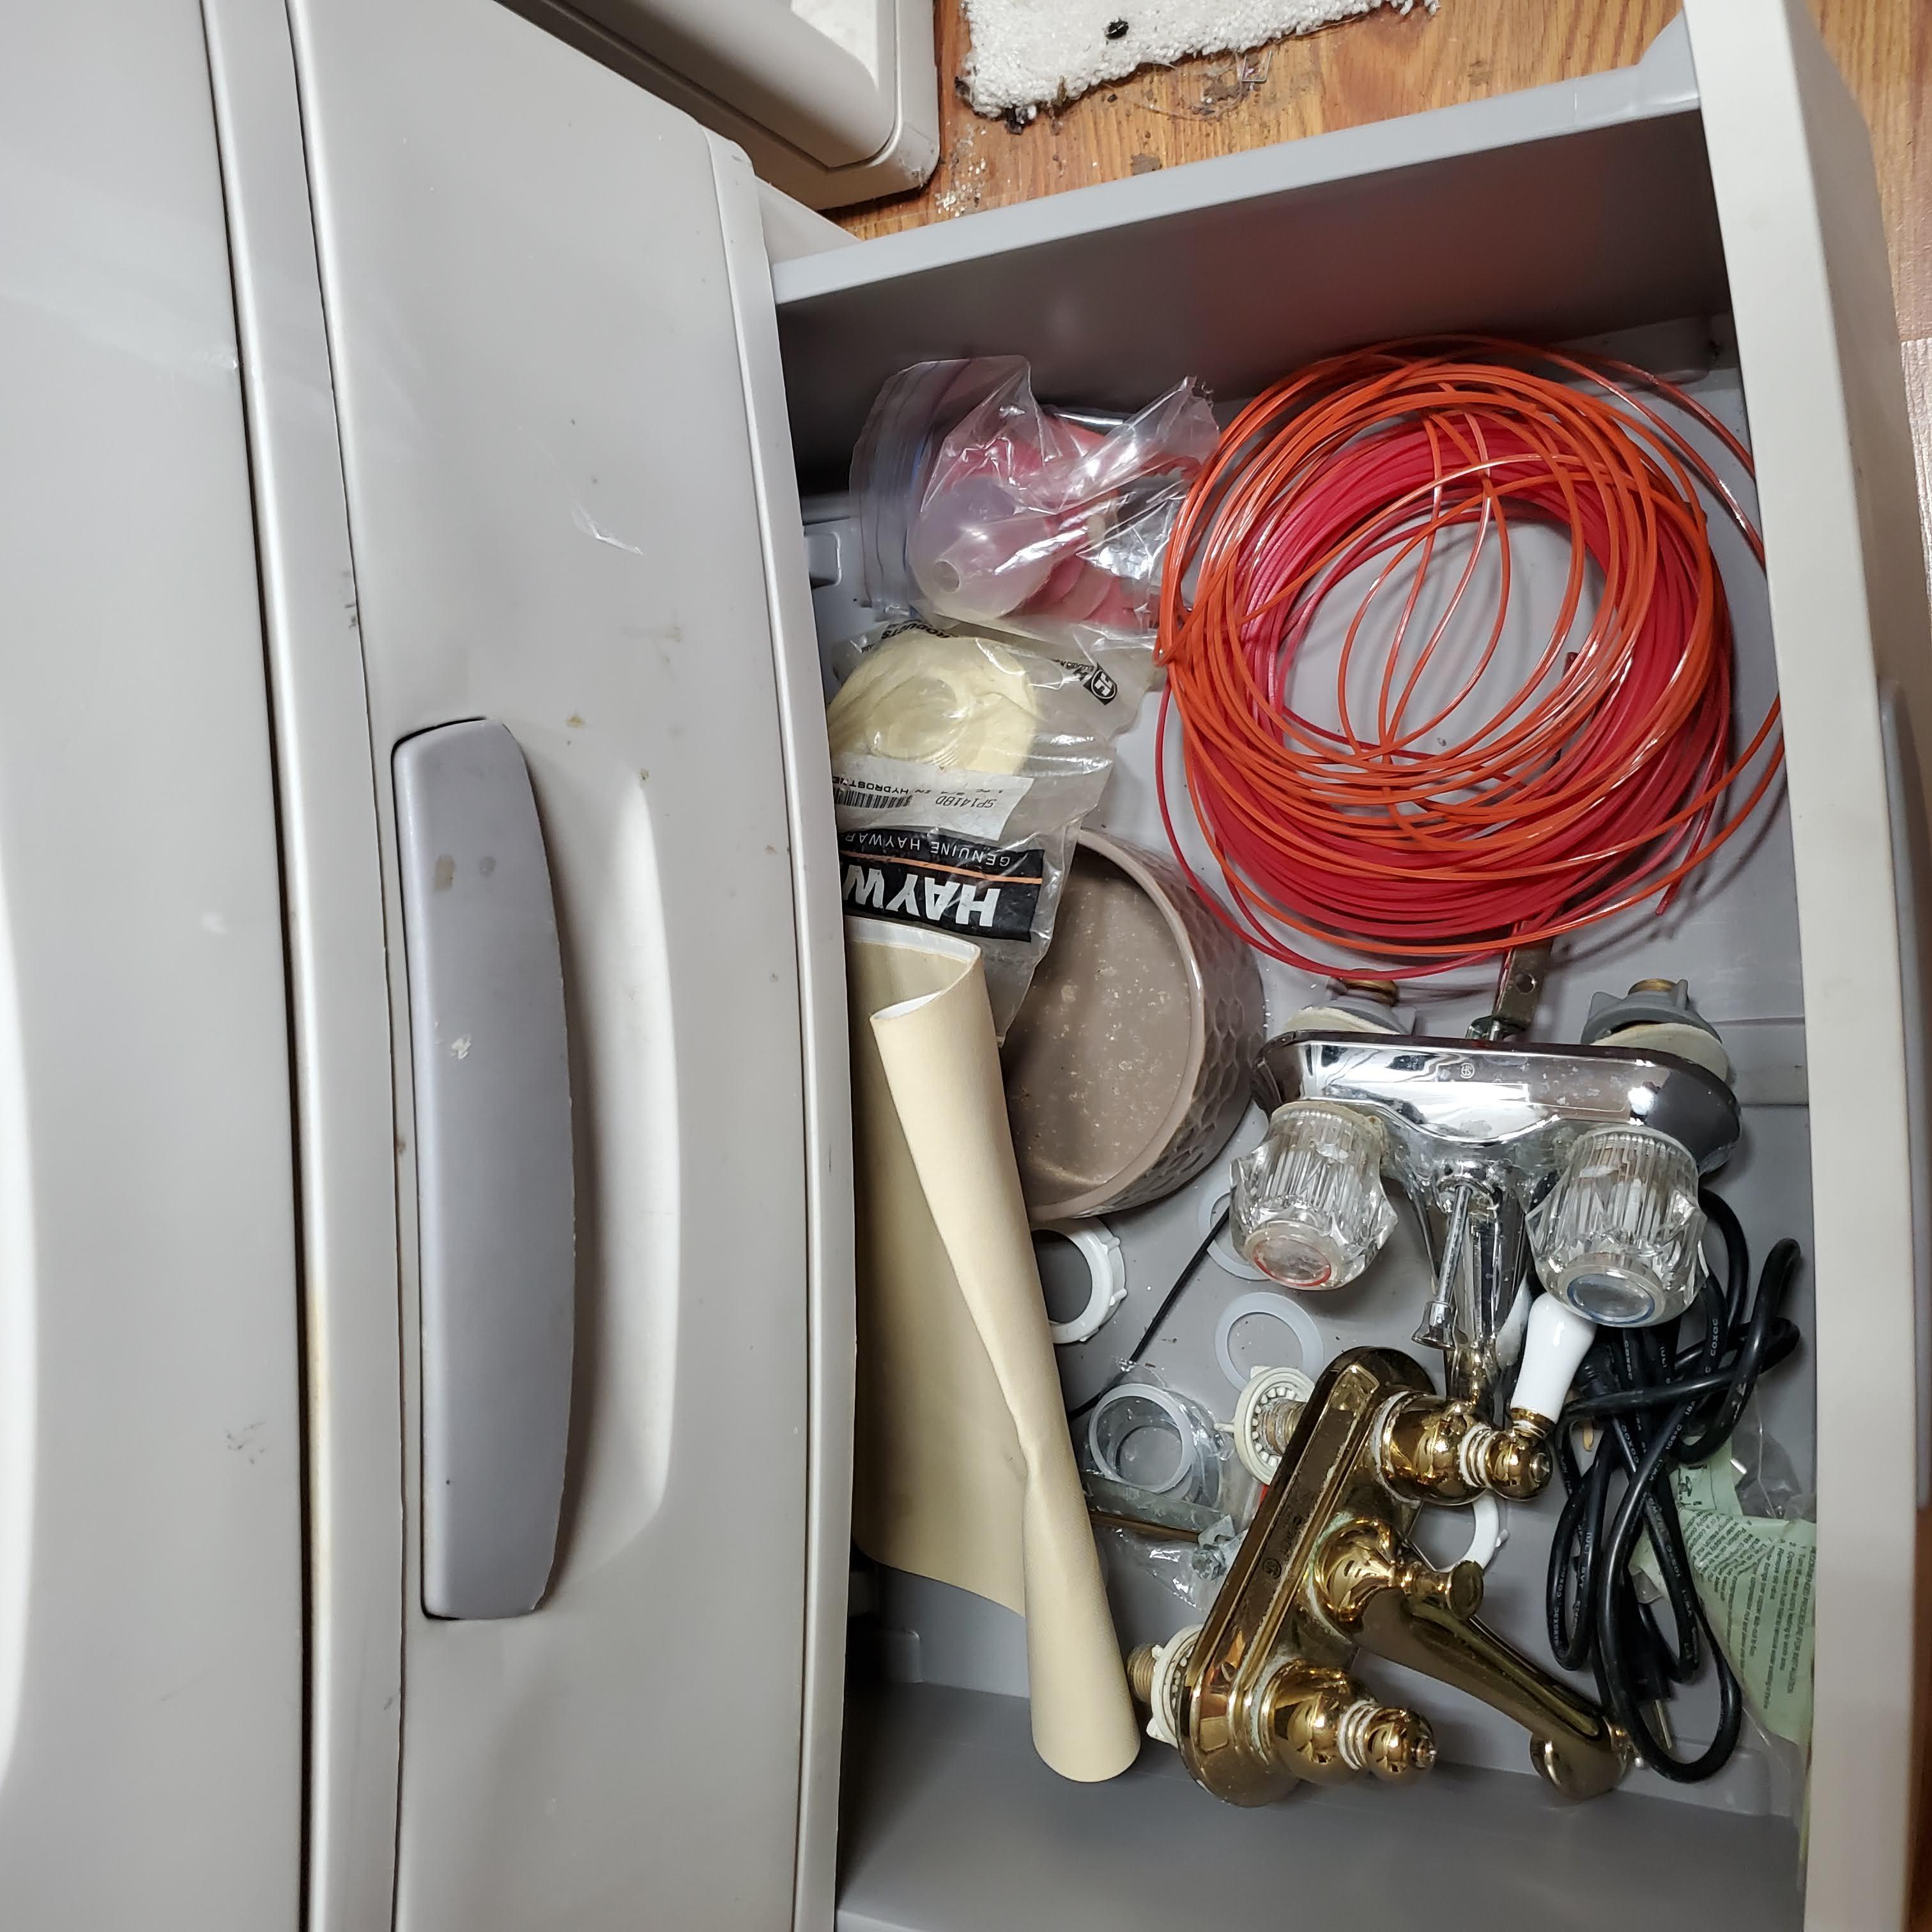 Sterilite Plastic 4 Drawer Storage Cabinet and Contents